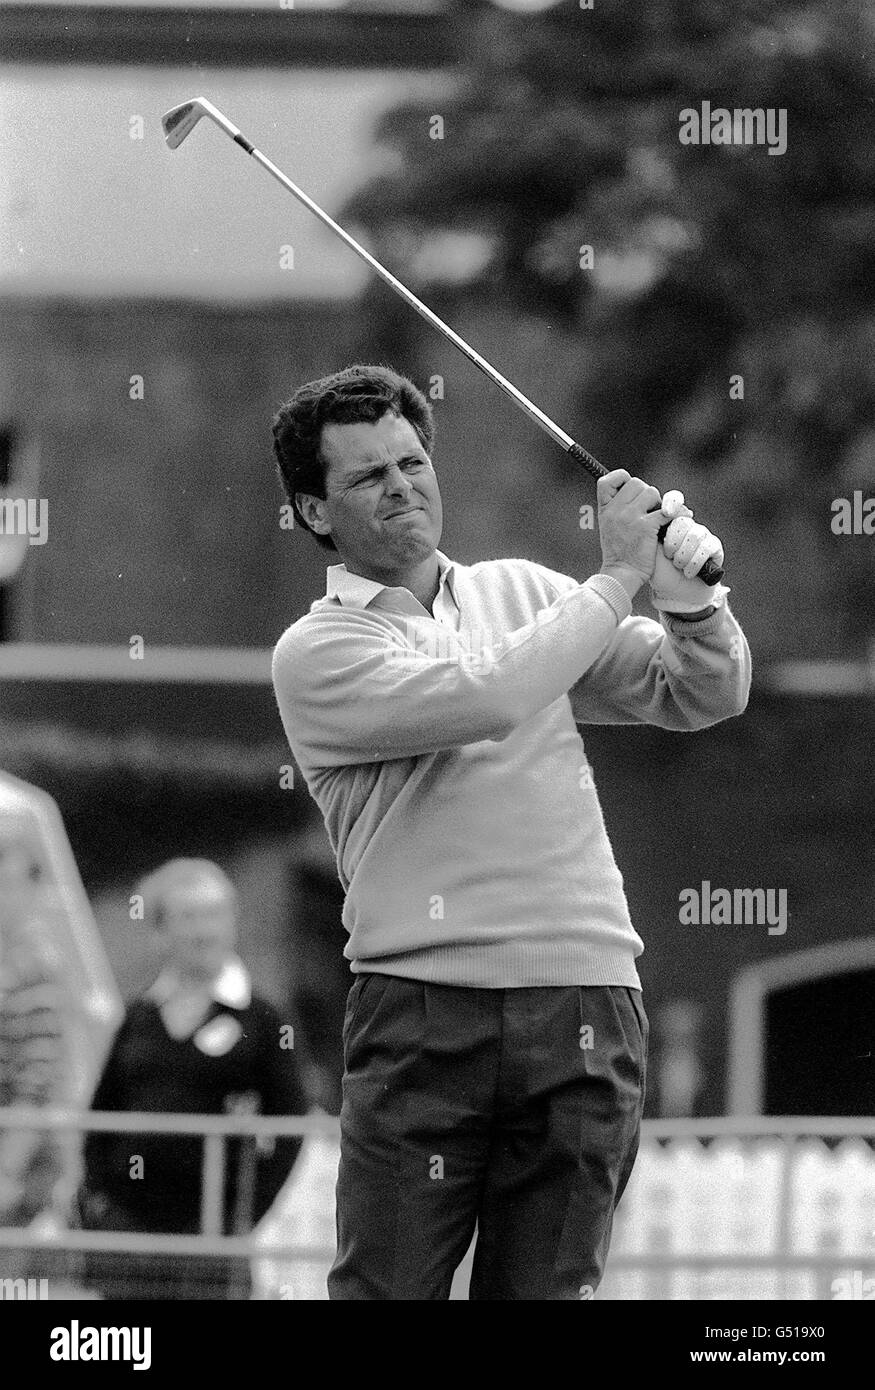 Bernard Gallacher 1985. Le golfeur Bernard Gallacher en action en 1985. Banque D'Images